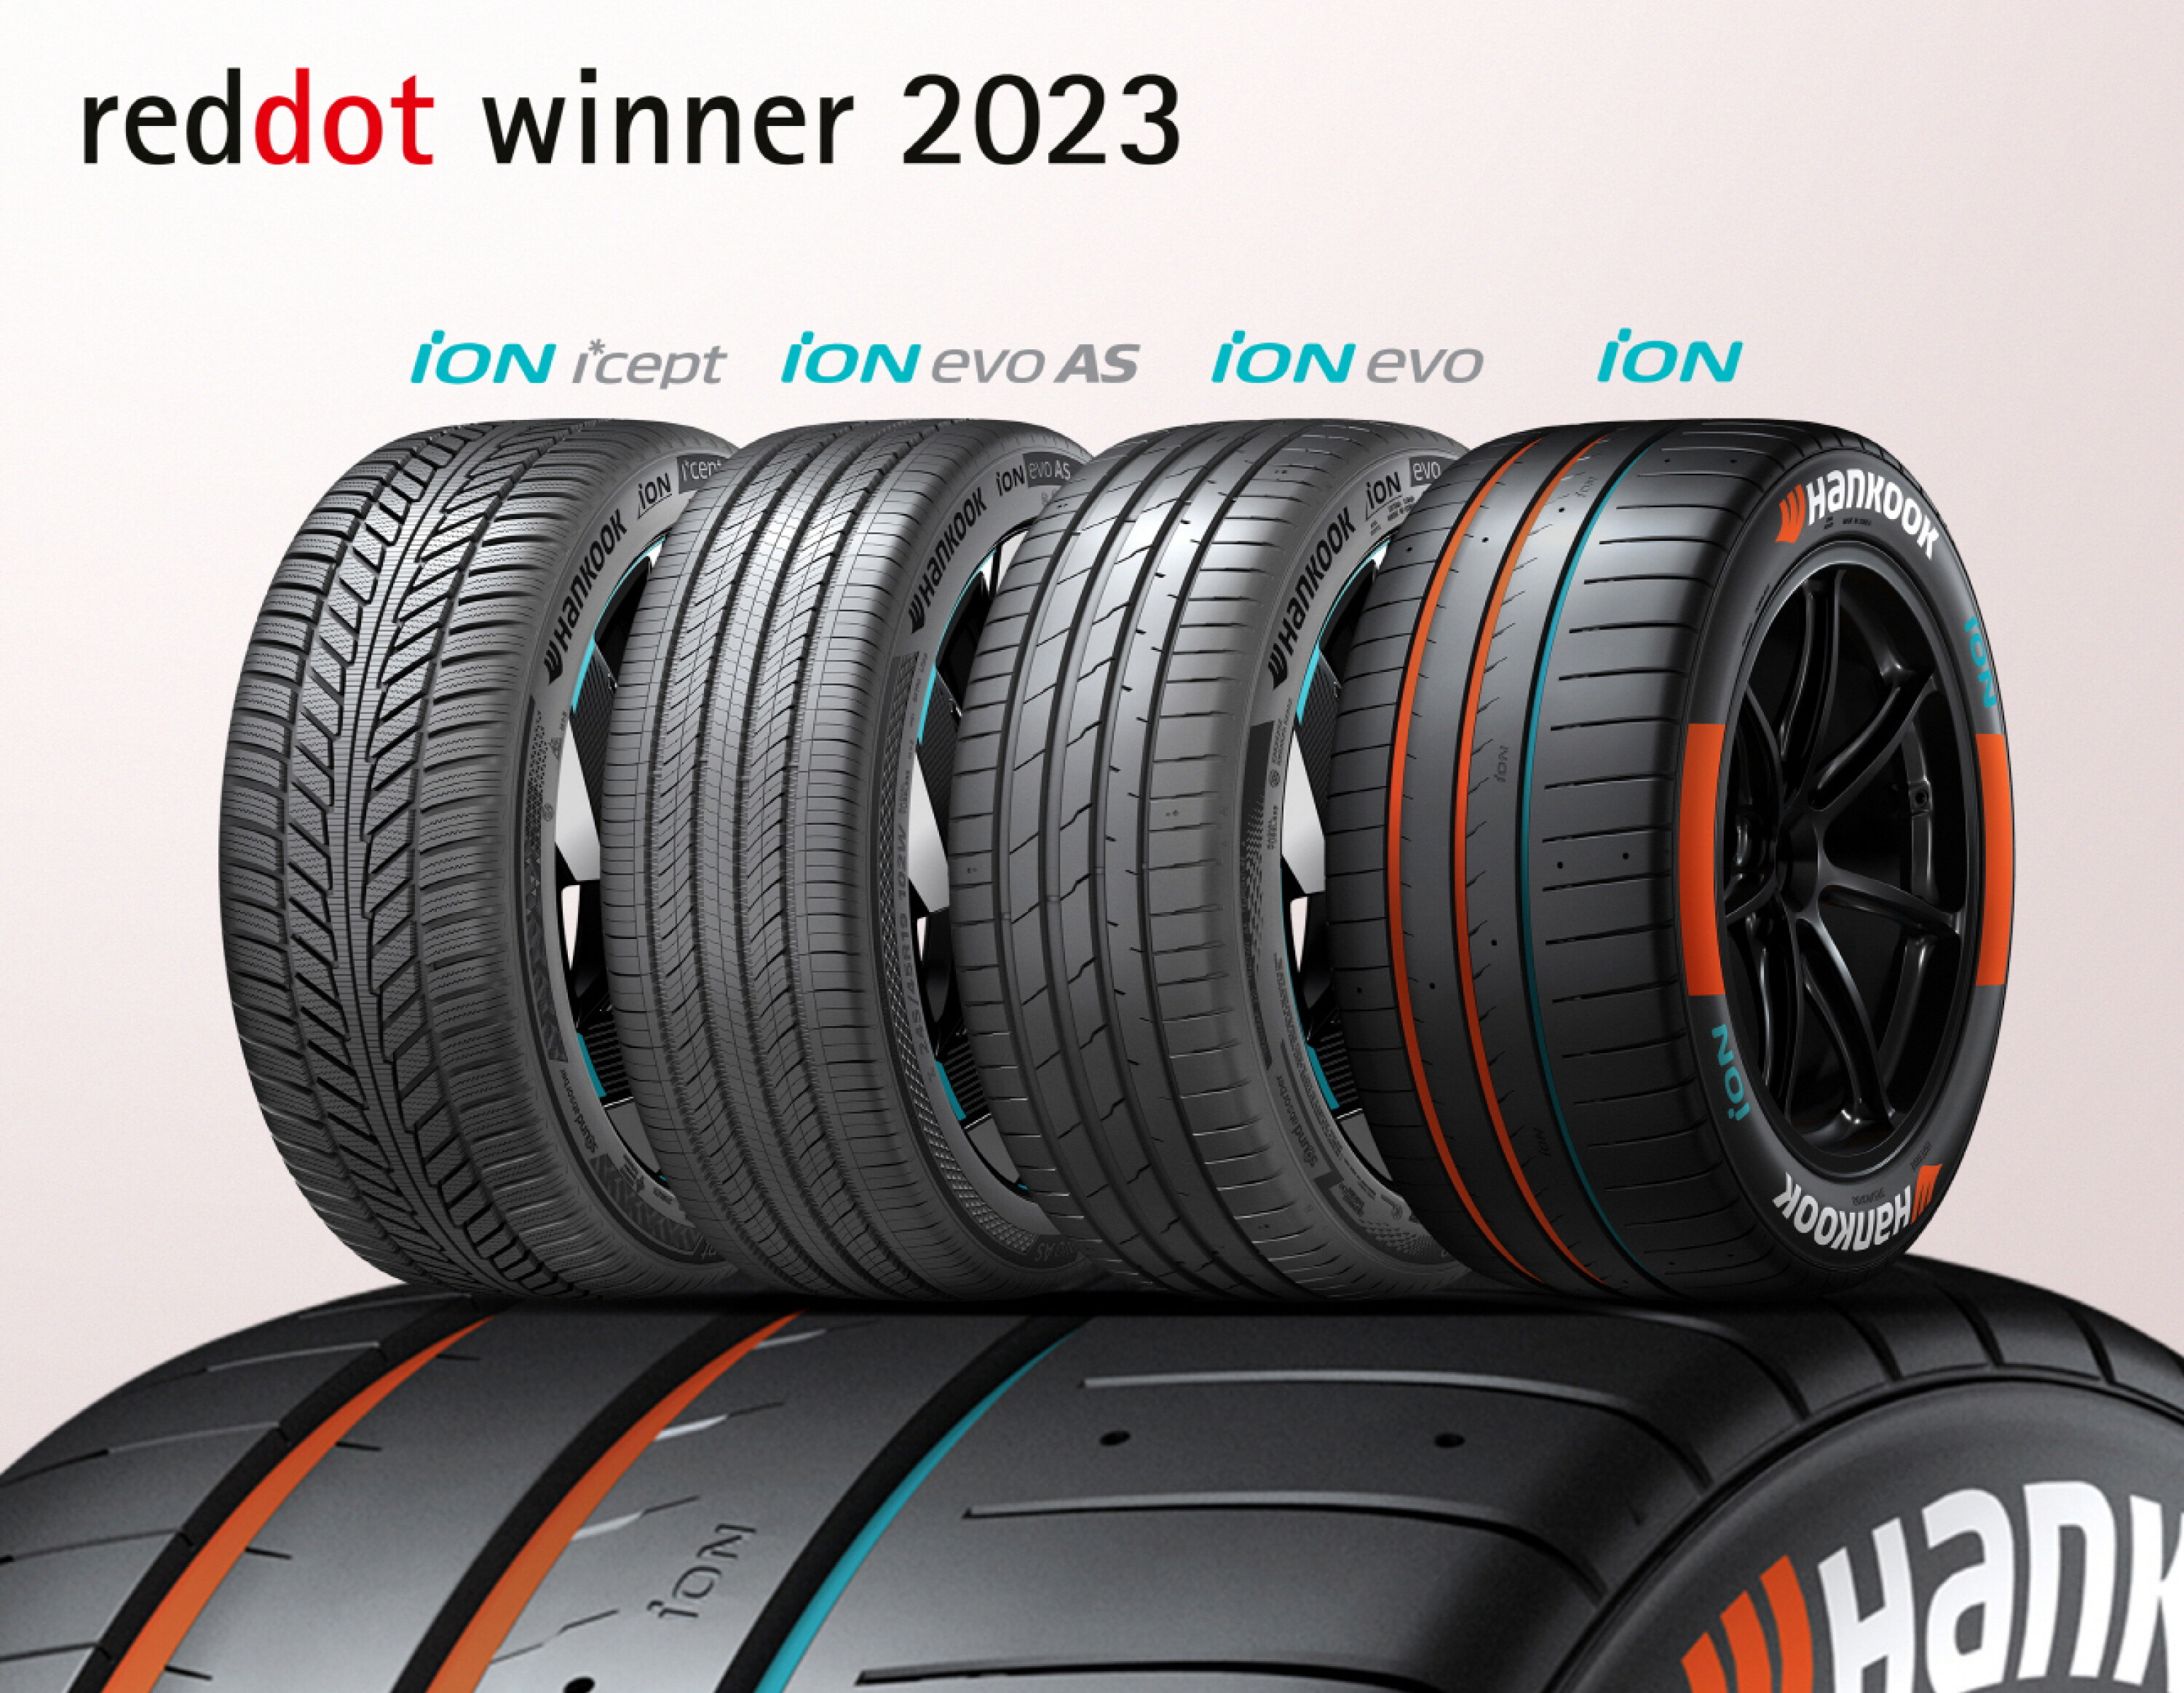 b5f21e70/hankook tyre ion won 4 awards at the red dot design award 2023 jpg